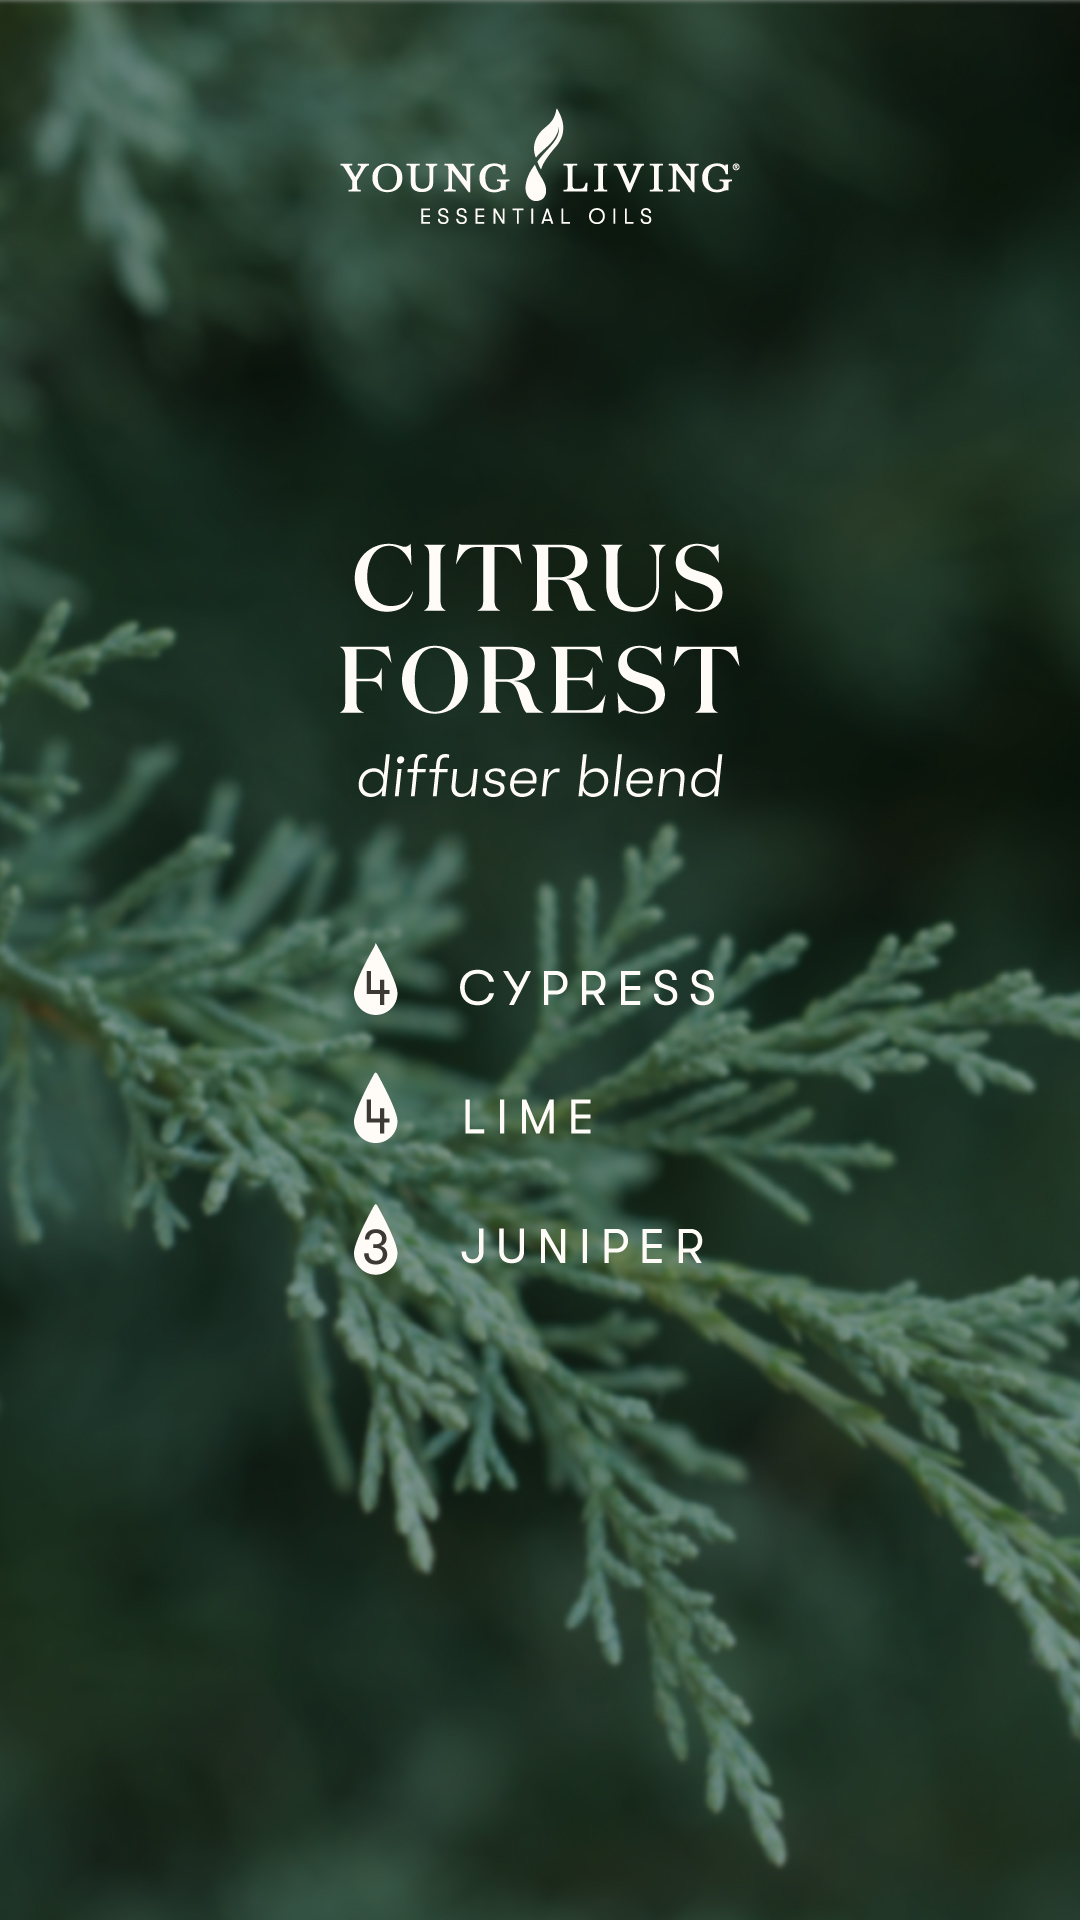 Citrus Forest diffuser blend - Young Living Lavender Life Blog 